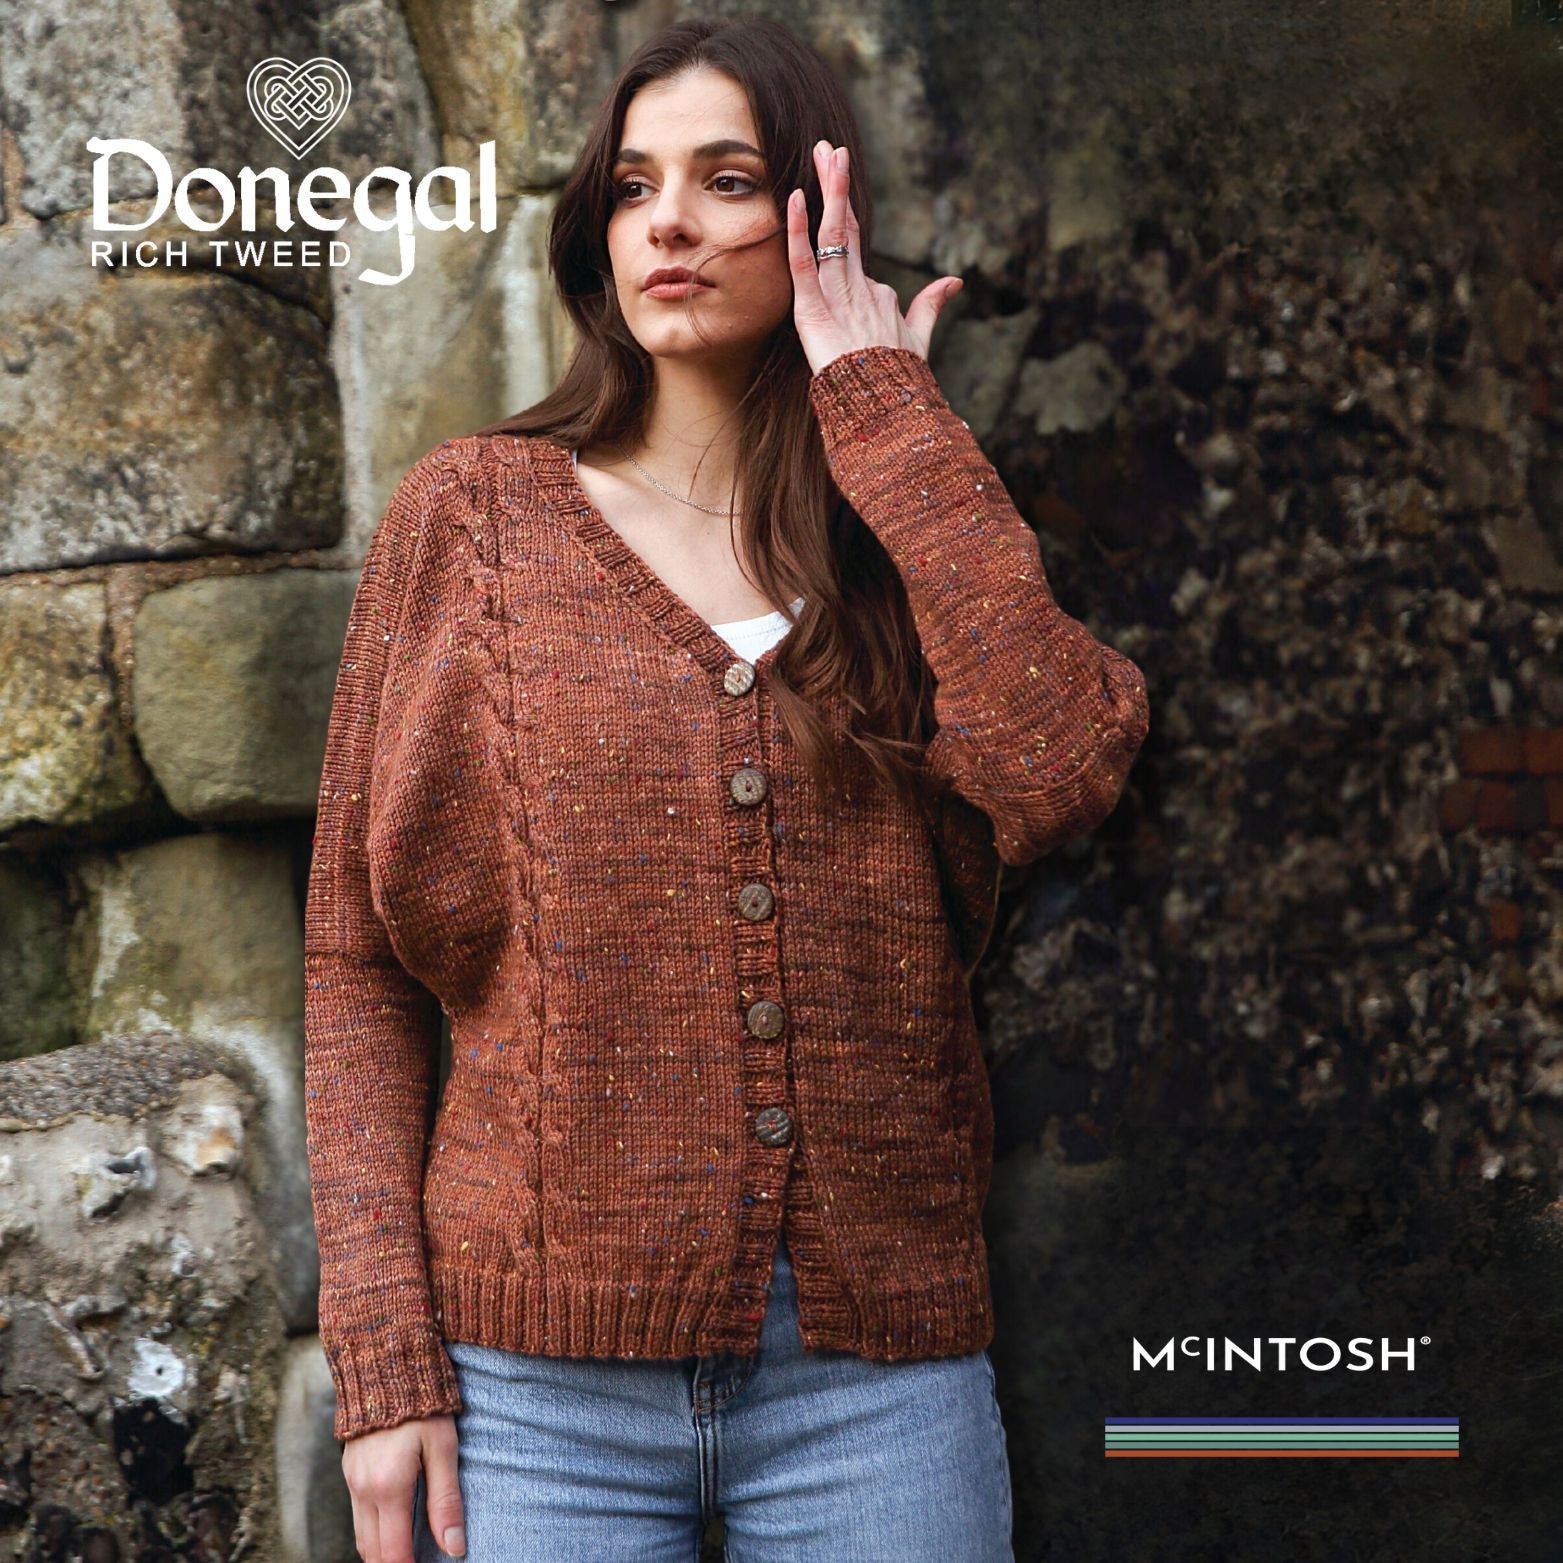 Macchiato Cardigan - Donegal Rich Tweed Mindful Knitting Kit in DK | McIntosh